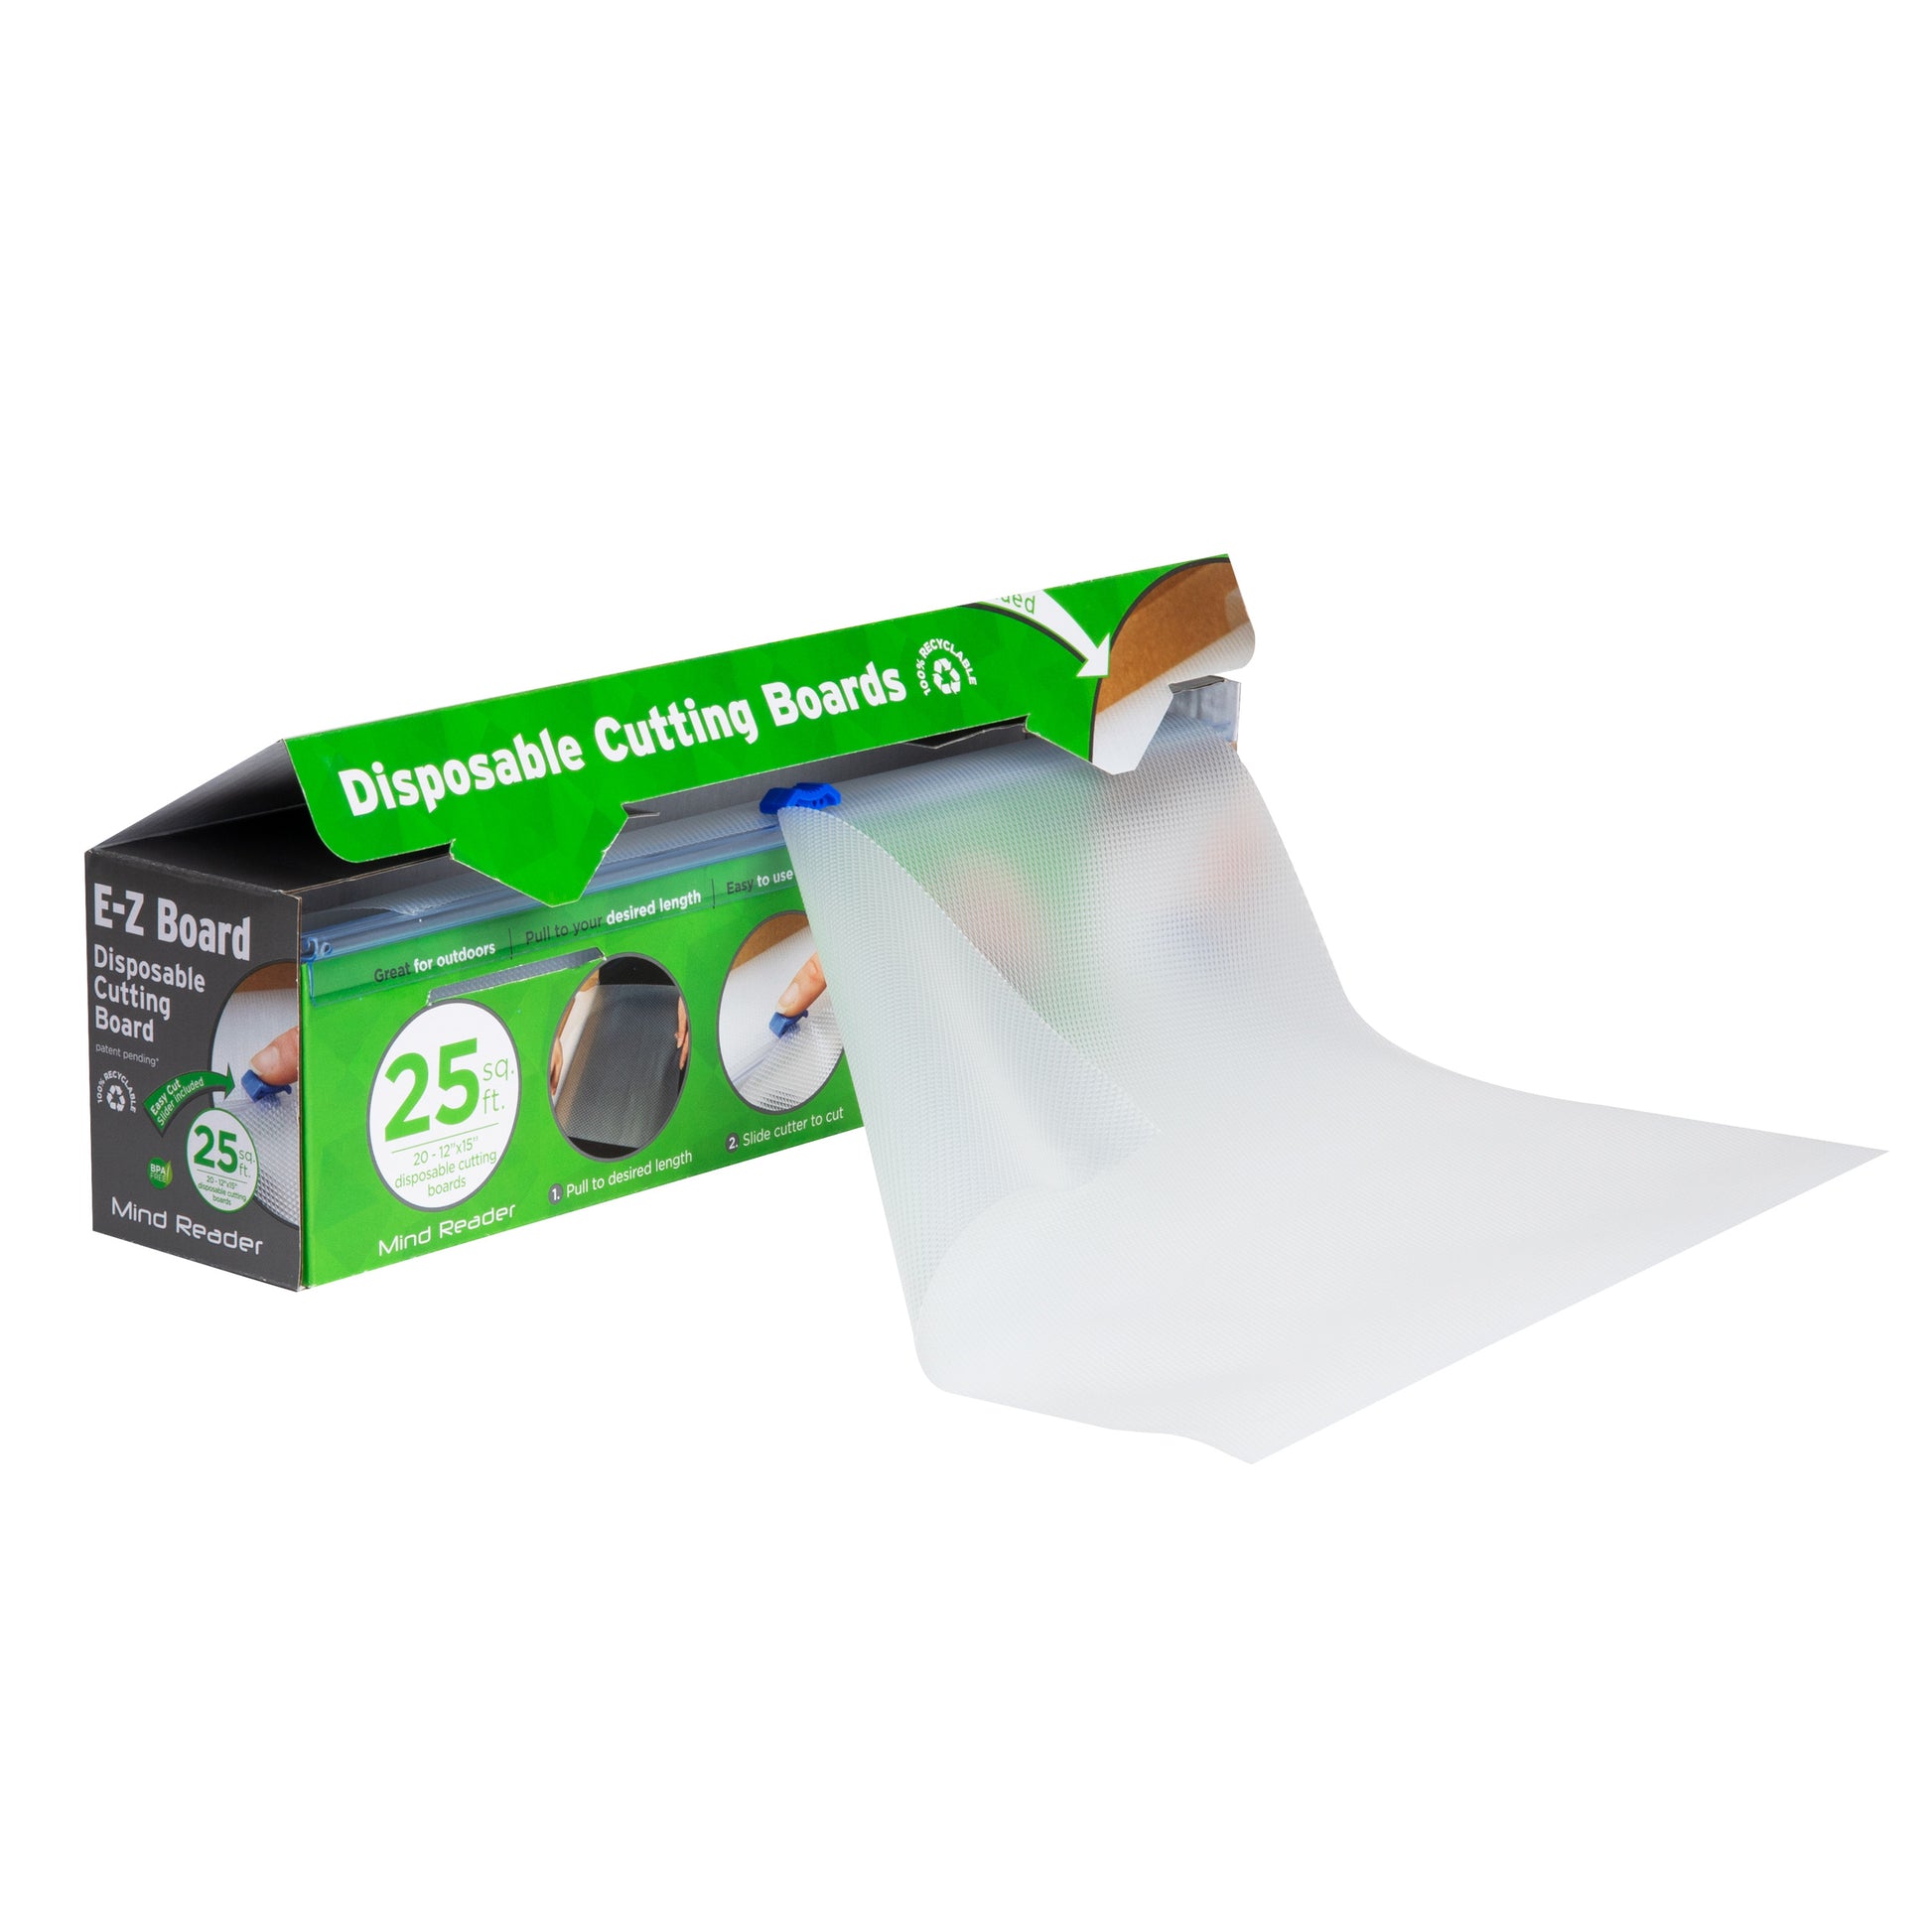 Disposable Cutting Board - Big Green Egg